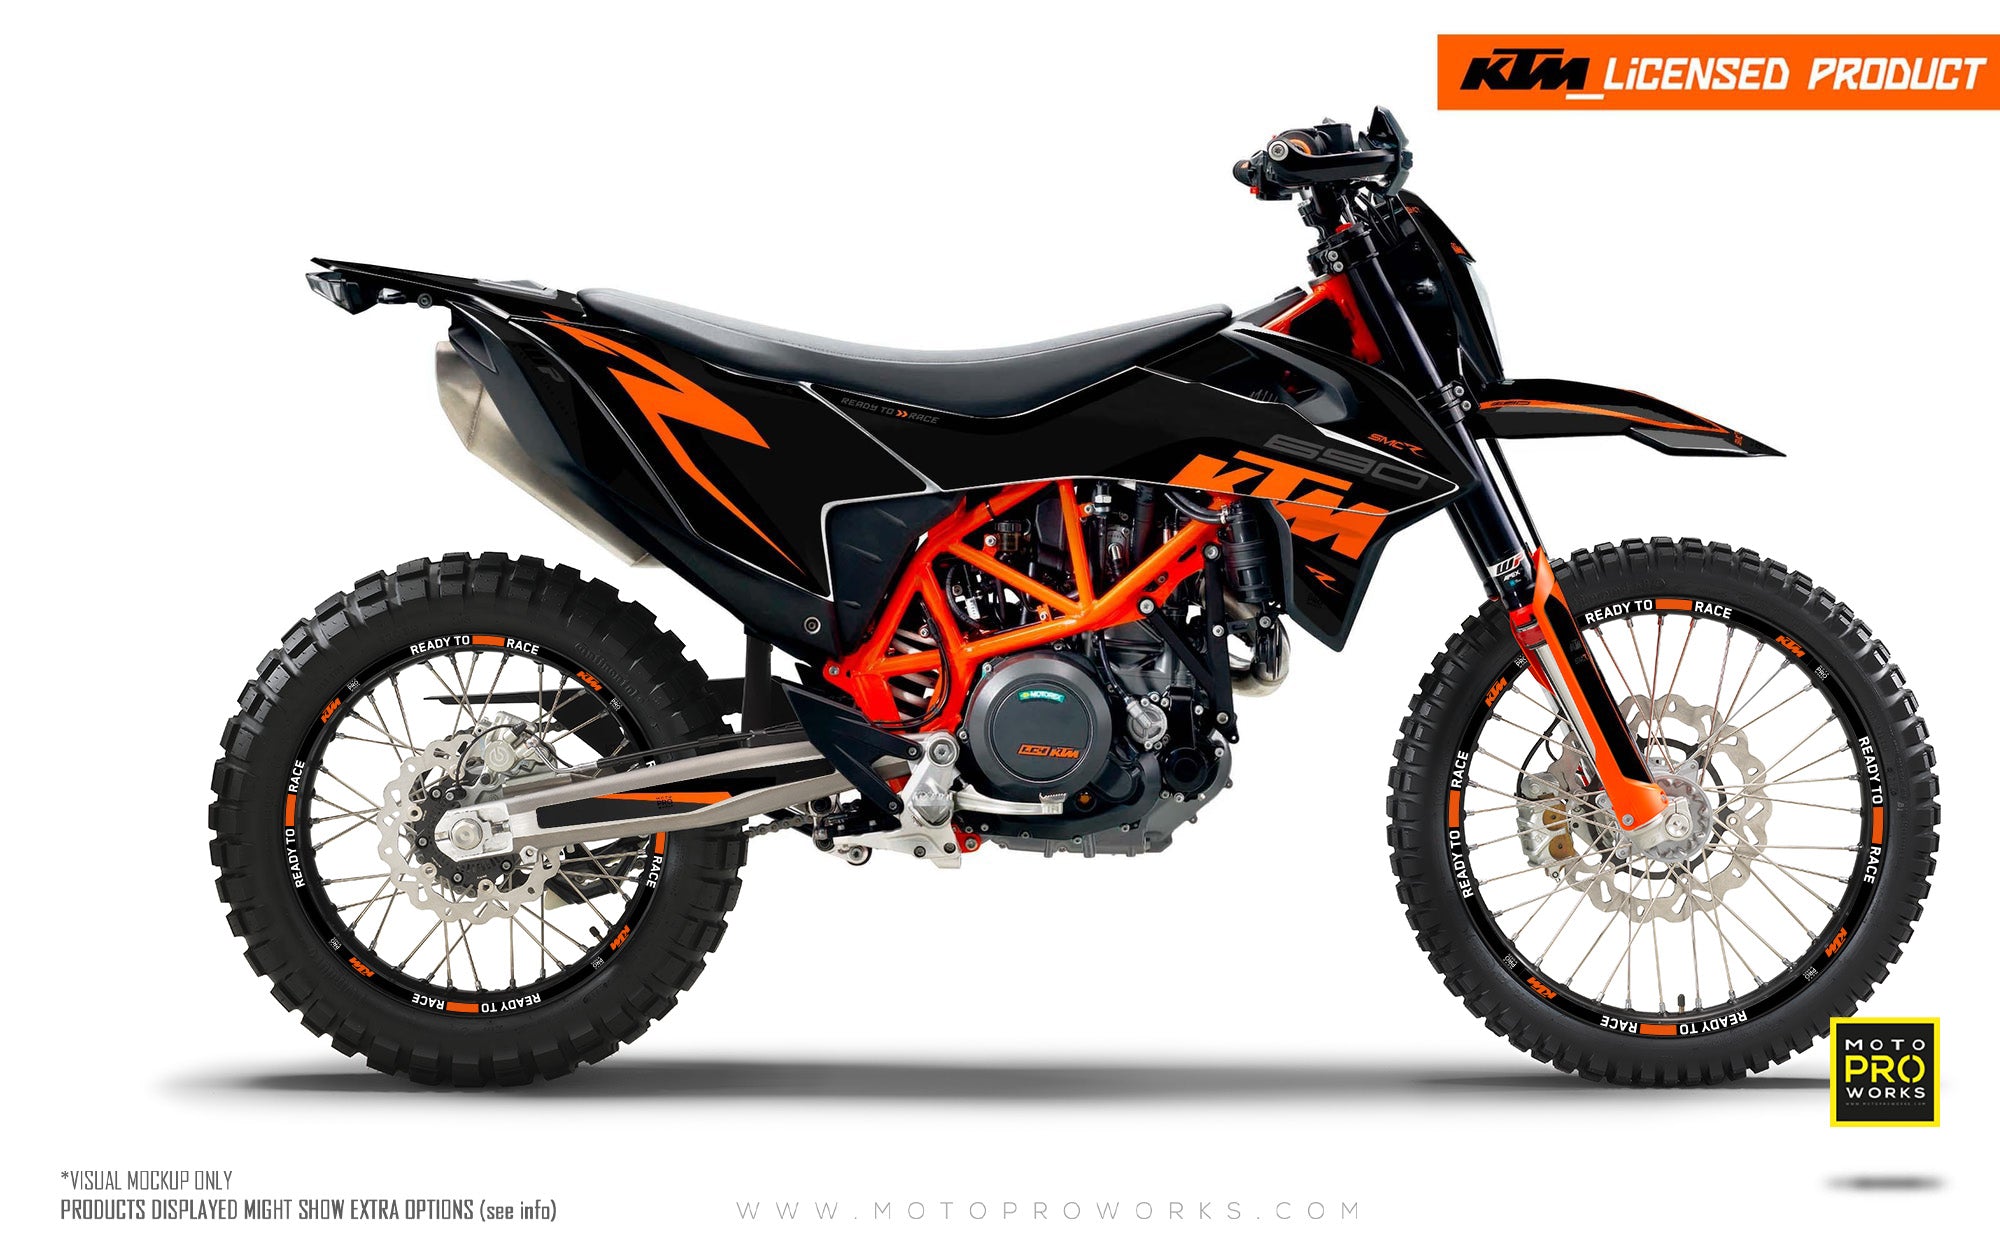 KTM GRAPHIC KIT - "Torque" (Black/Orange) - MotoProWorks | Decals and Bike Graphic kit